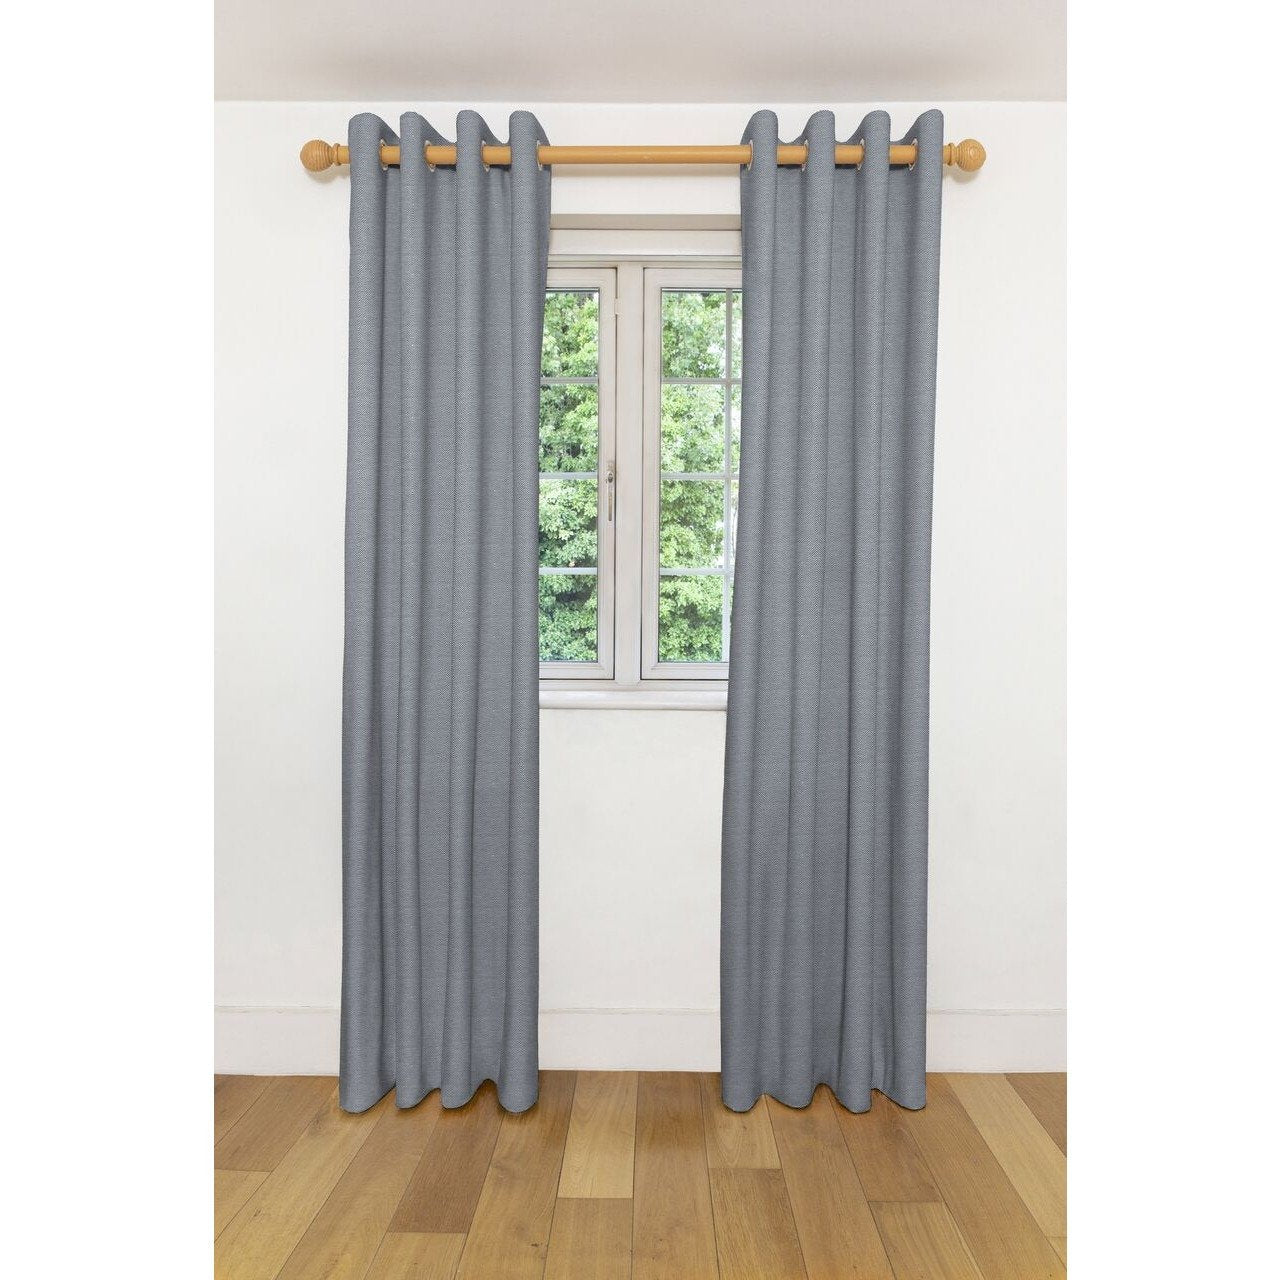 McAlister Textiles Herringbone Twill Black + White Curtains Tailored Curtains 116cm(w) x 182cm(d) (46" x 72") 